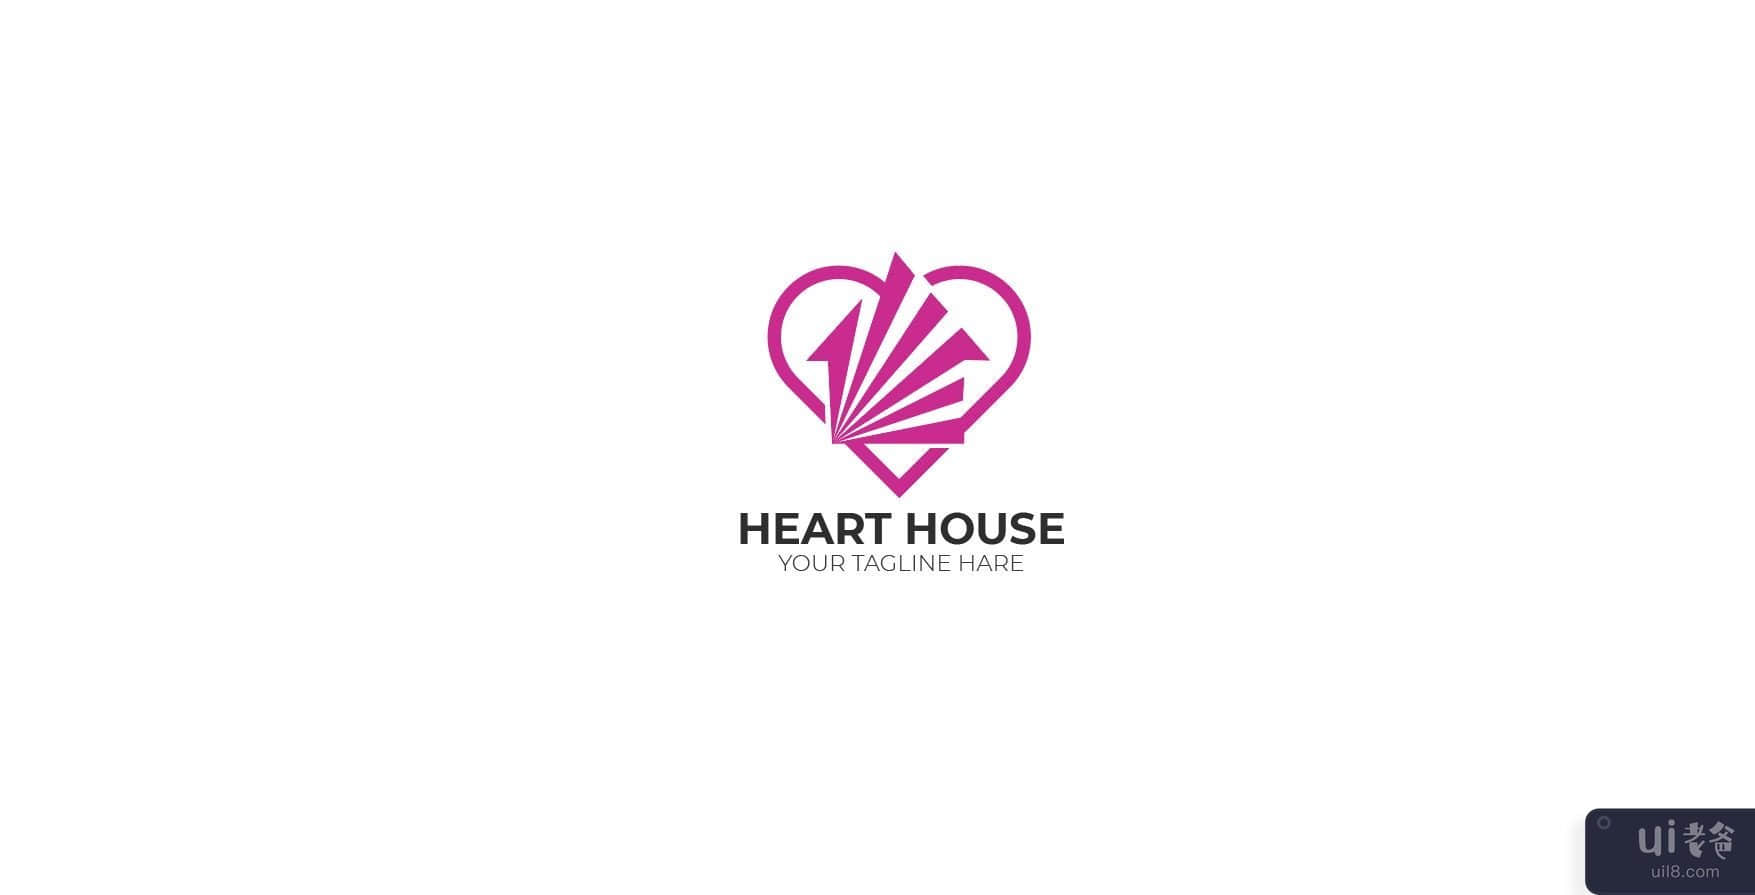 心之家徽标(Heart House logo)插图4